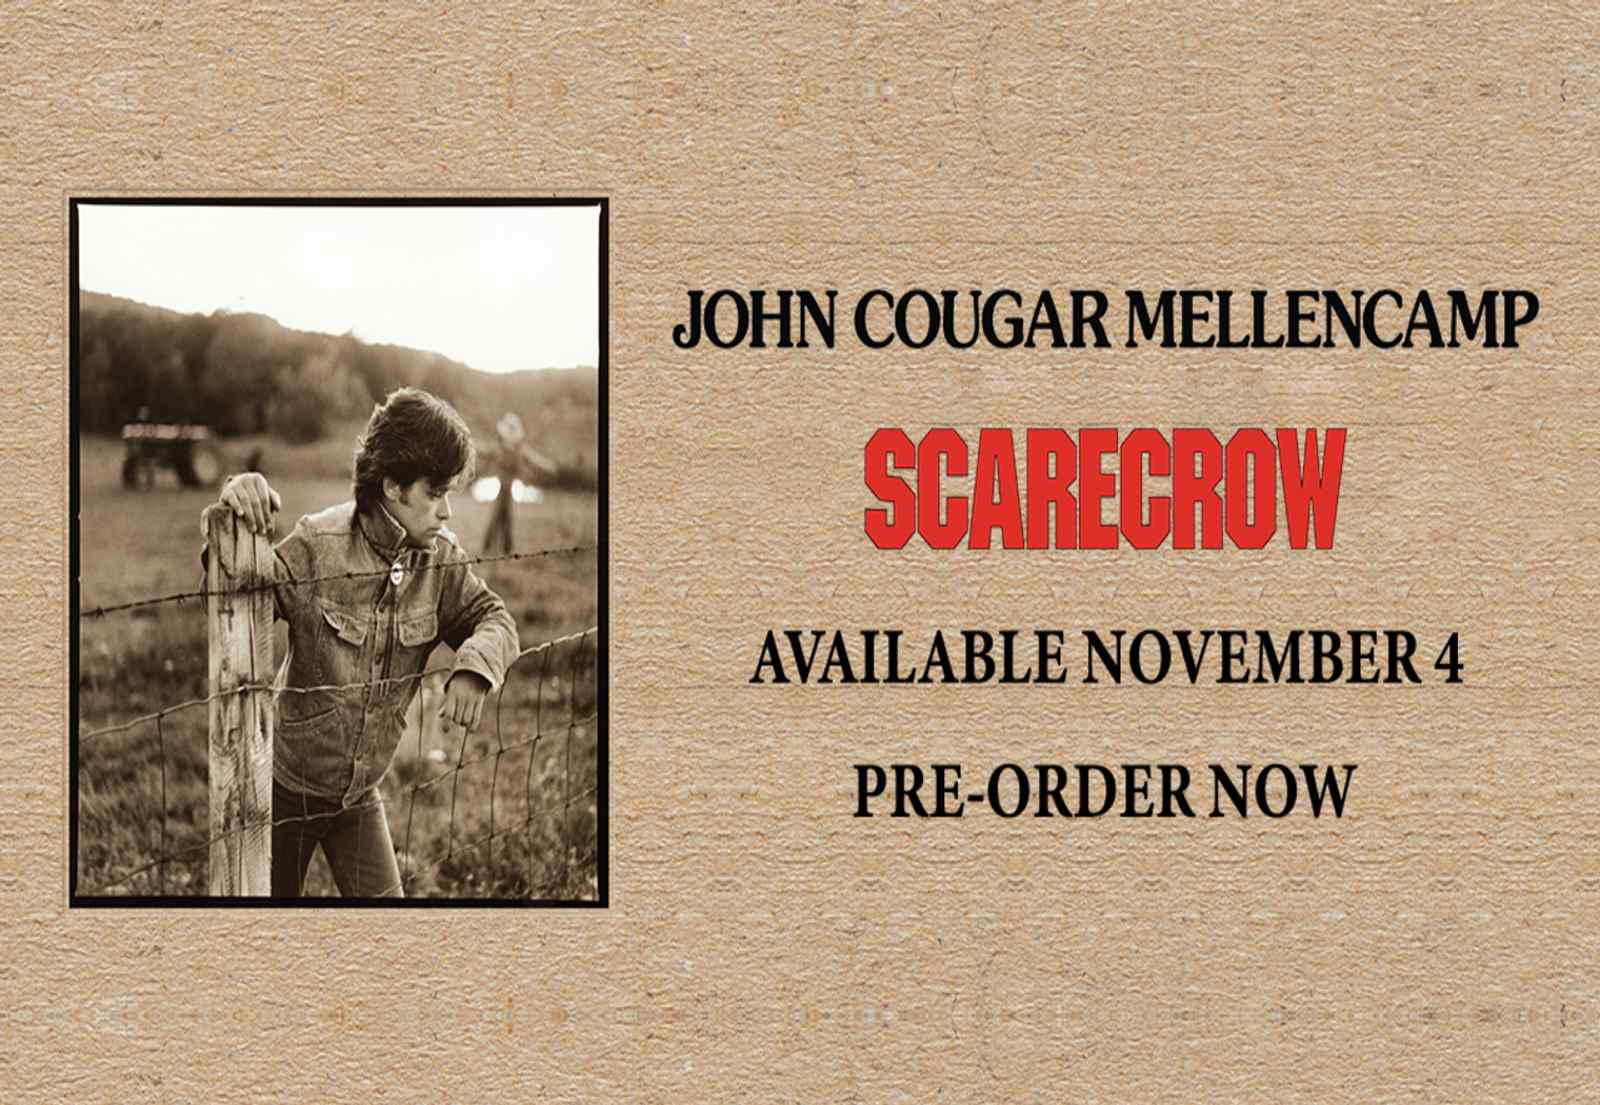 John Mellencamp To Reissue "Scarecrow" - "Scarecrow Deluxe" Out November 4th